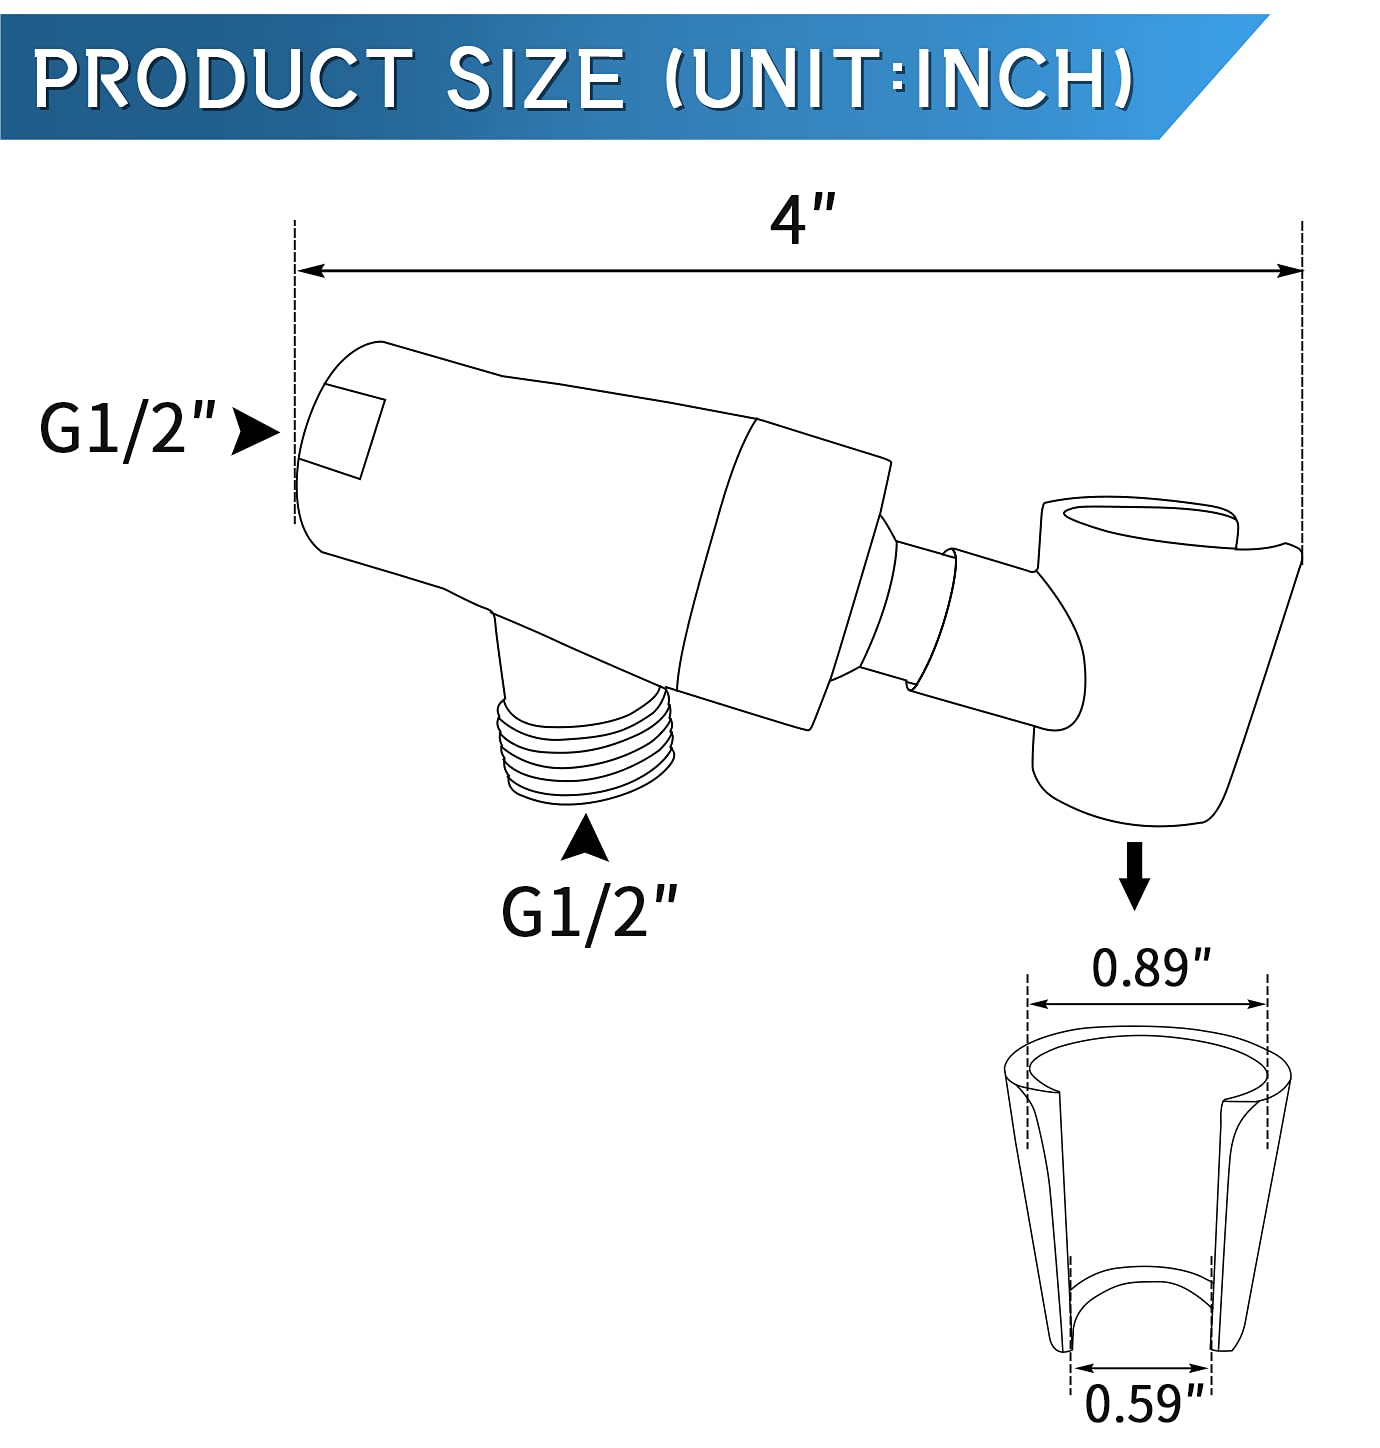 G-Promise Metal Shower Head Holder for Hand Held Showerhead, Adjustable Bracket, Shower Arm Adapter, Universal Shower Arm Mount, Chrome Finish